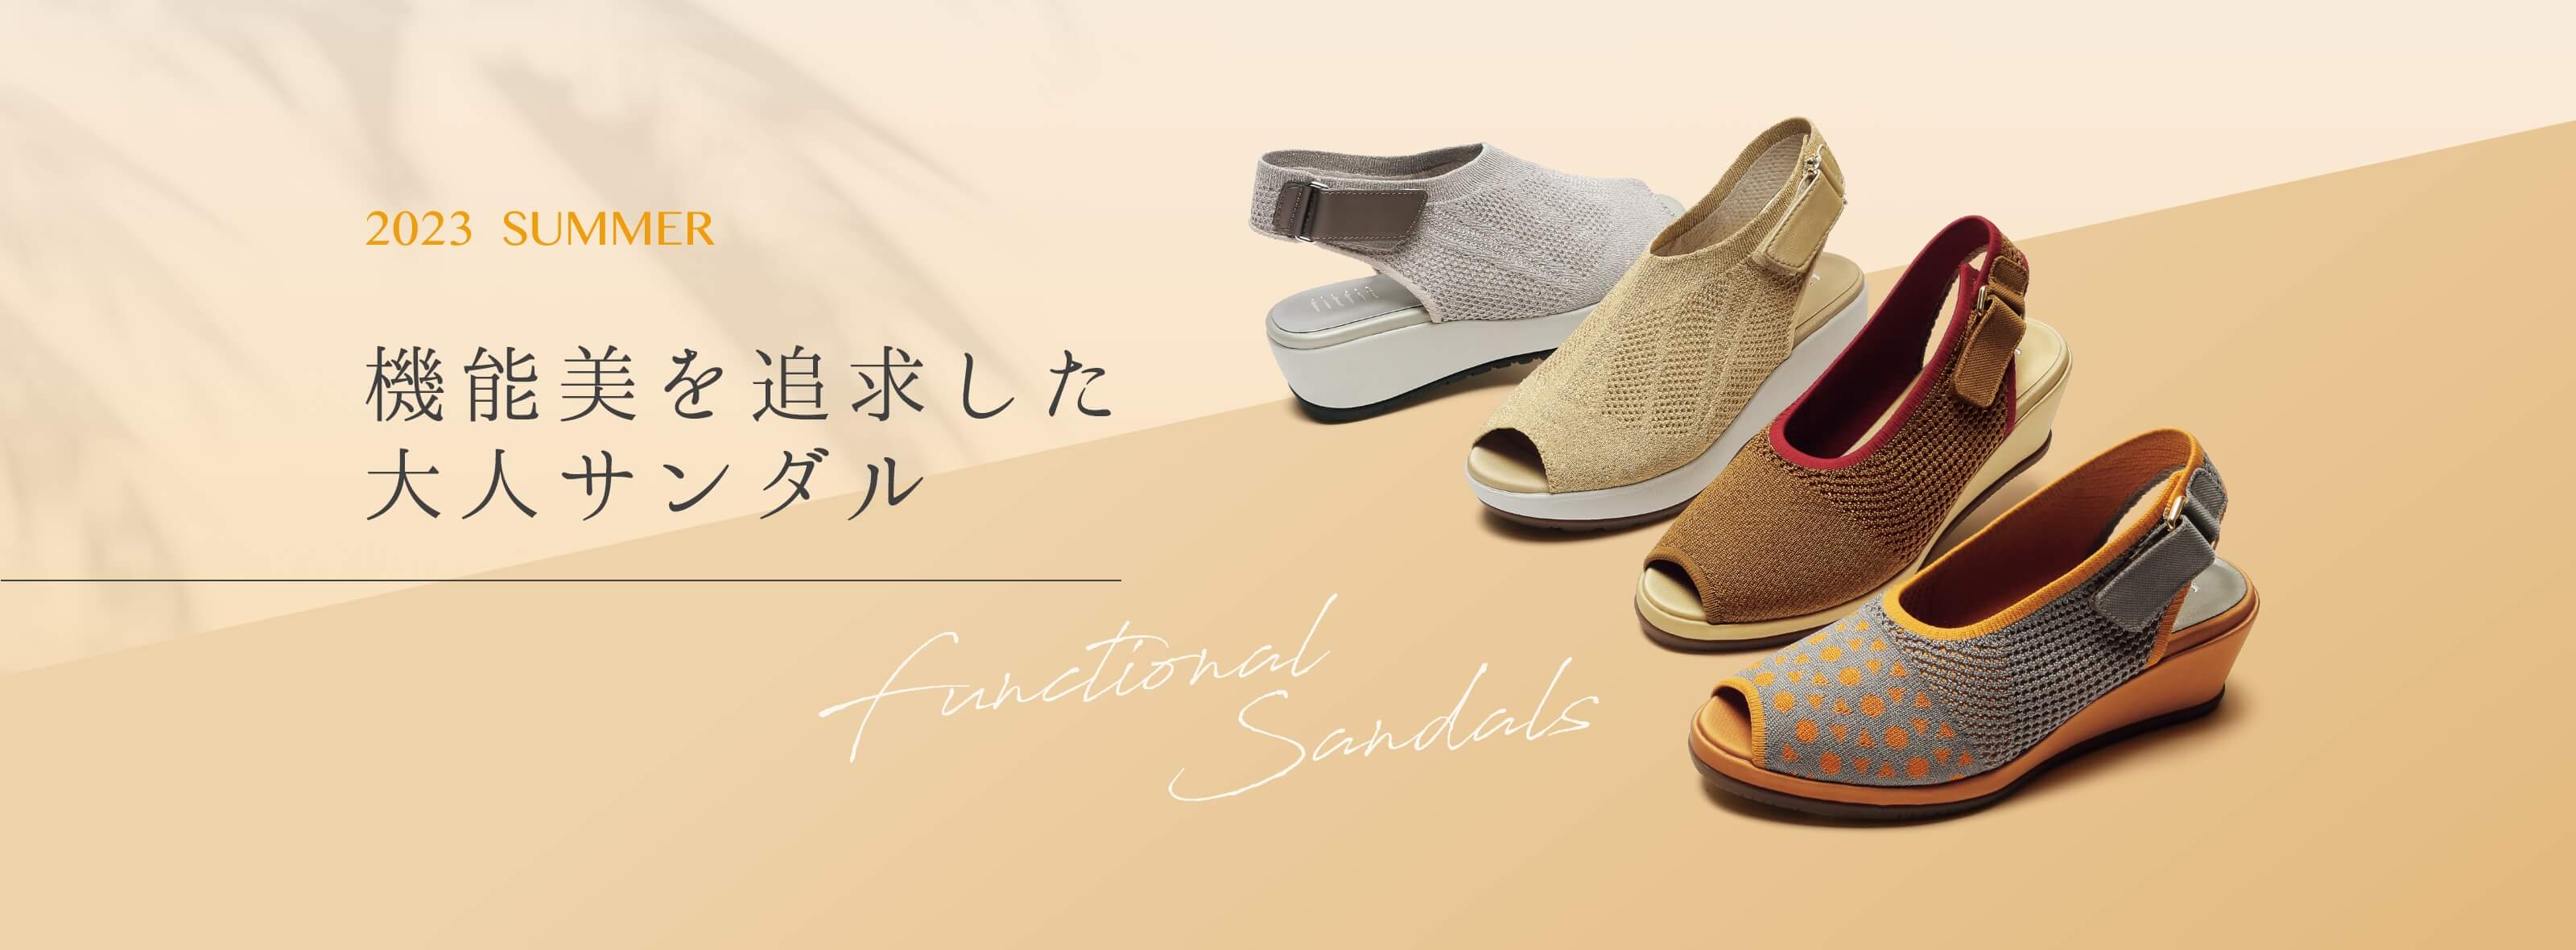 2023 SUMMER 機能美を追求した大人サンダル Functional Sandals